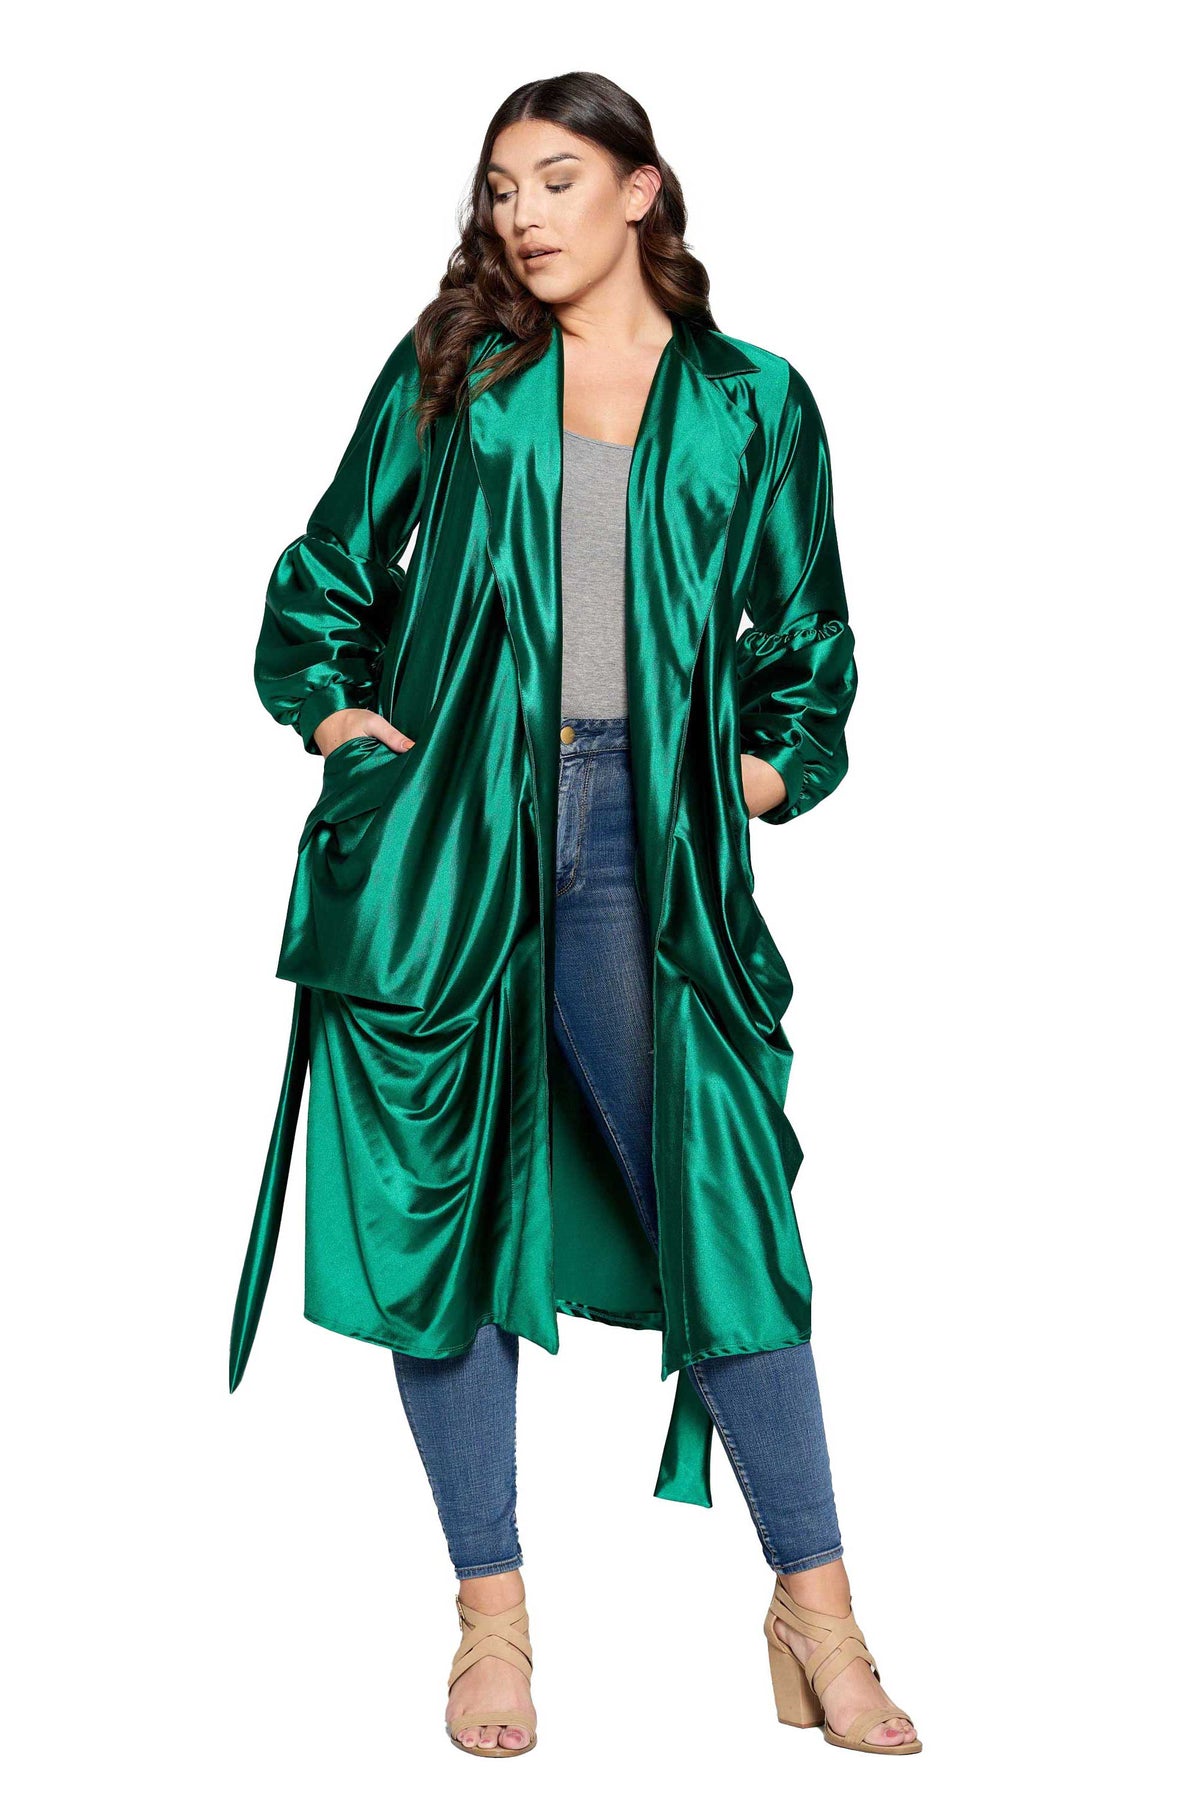 livd L I V D women's contemporary plus size fashion tie coat in shiny stretch satin in gucci green emerald